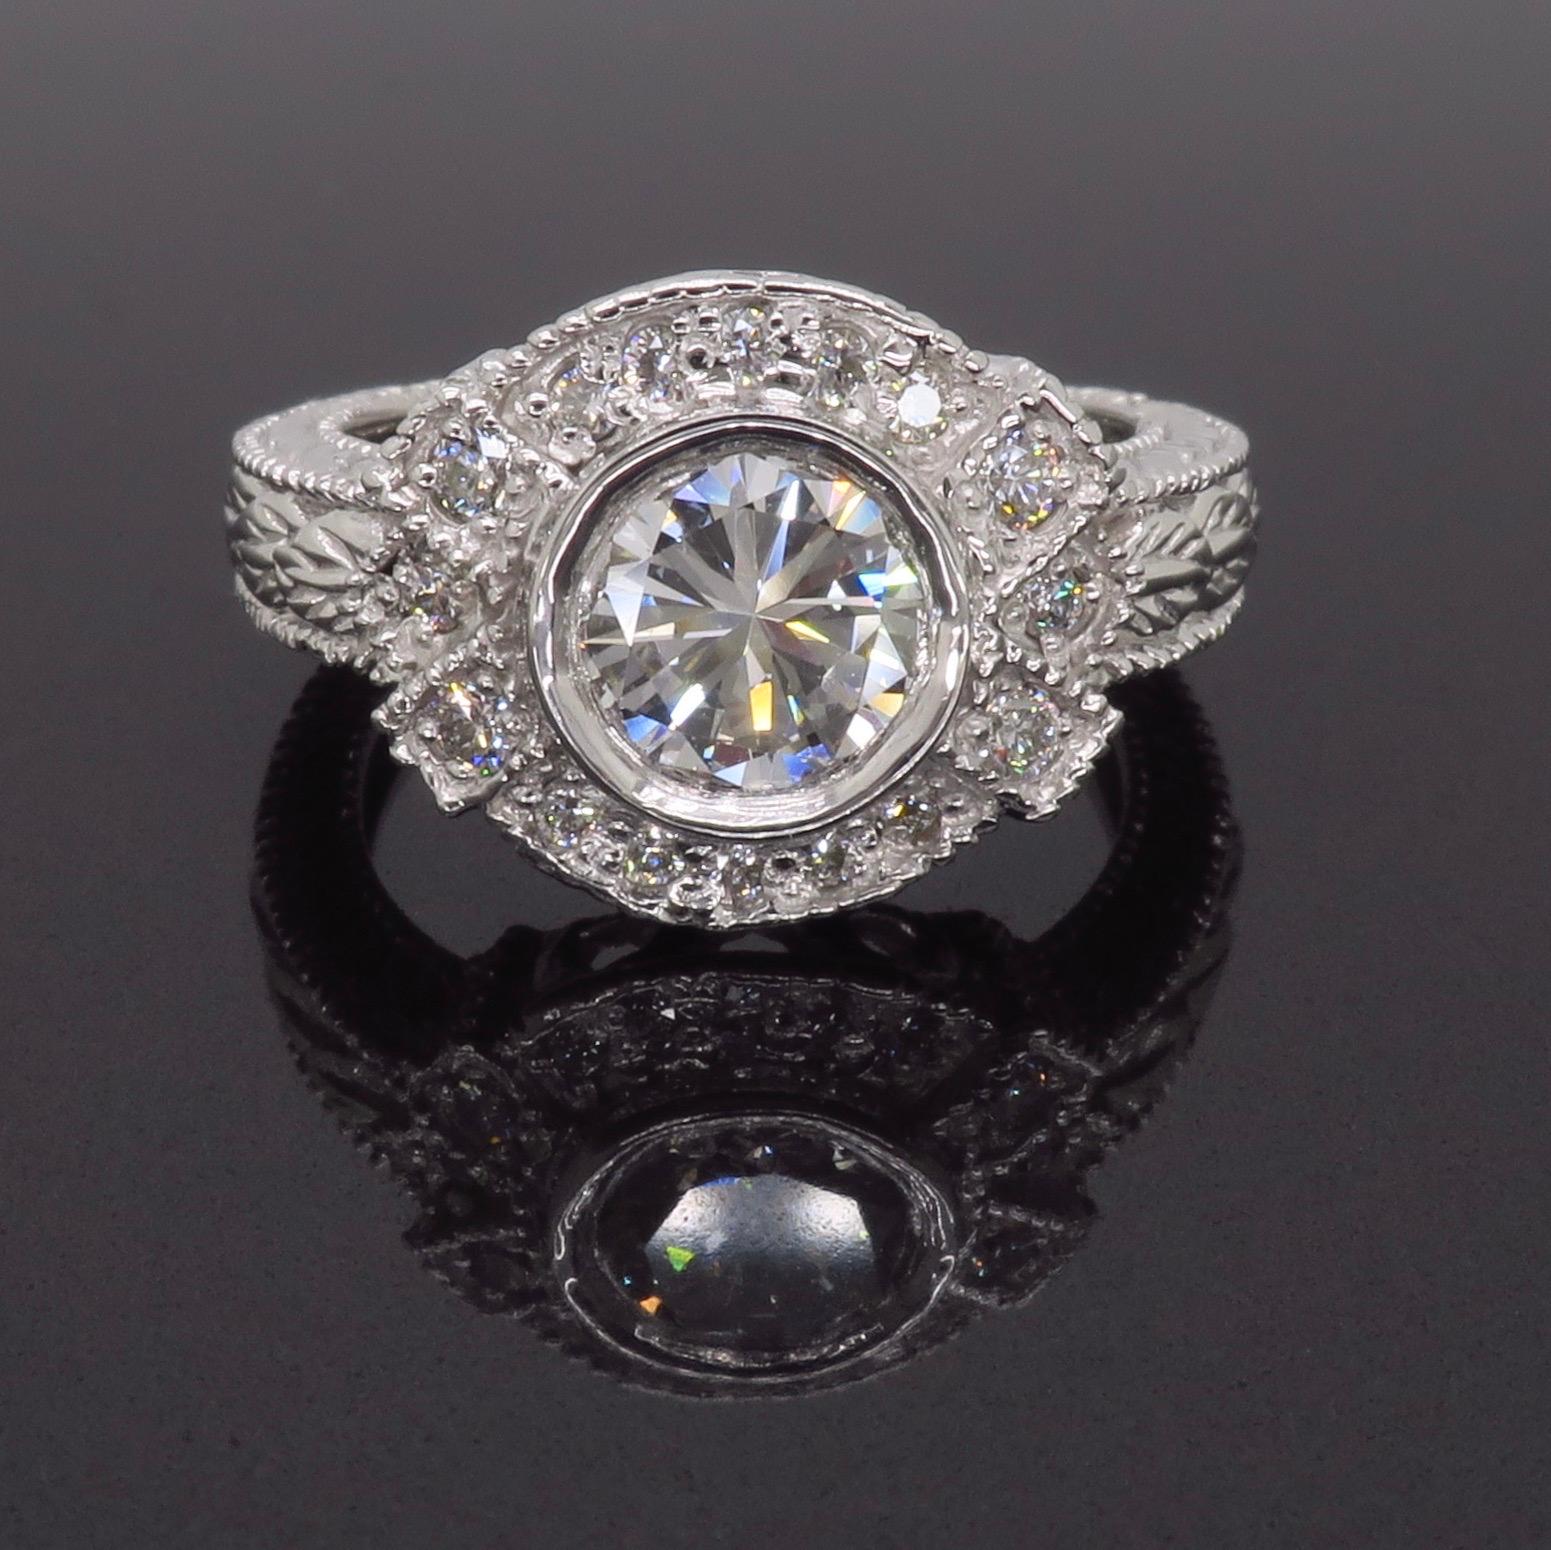 Women's or Men's Vintage Inspired 1.27 Carat Diamond Ring Made in 14 Karat White Gold For Sale